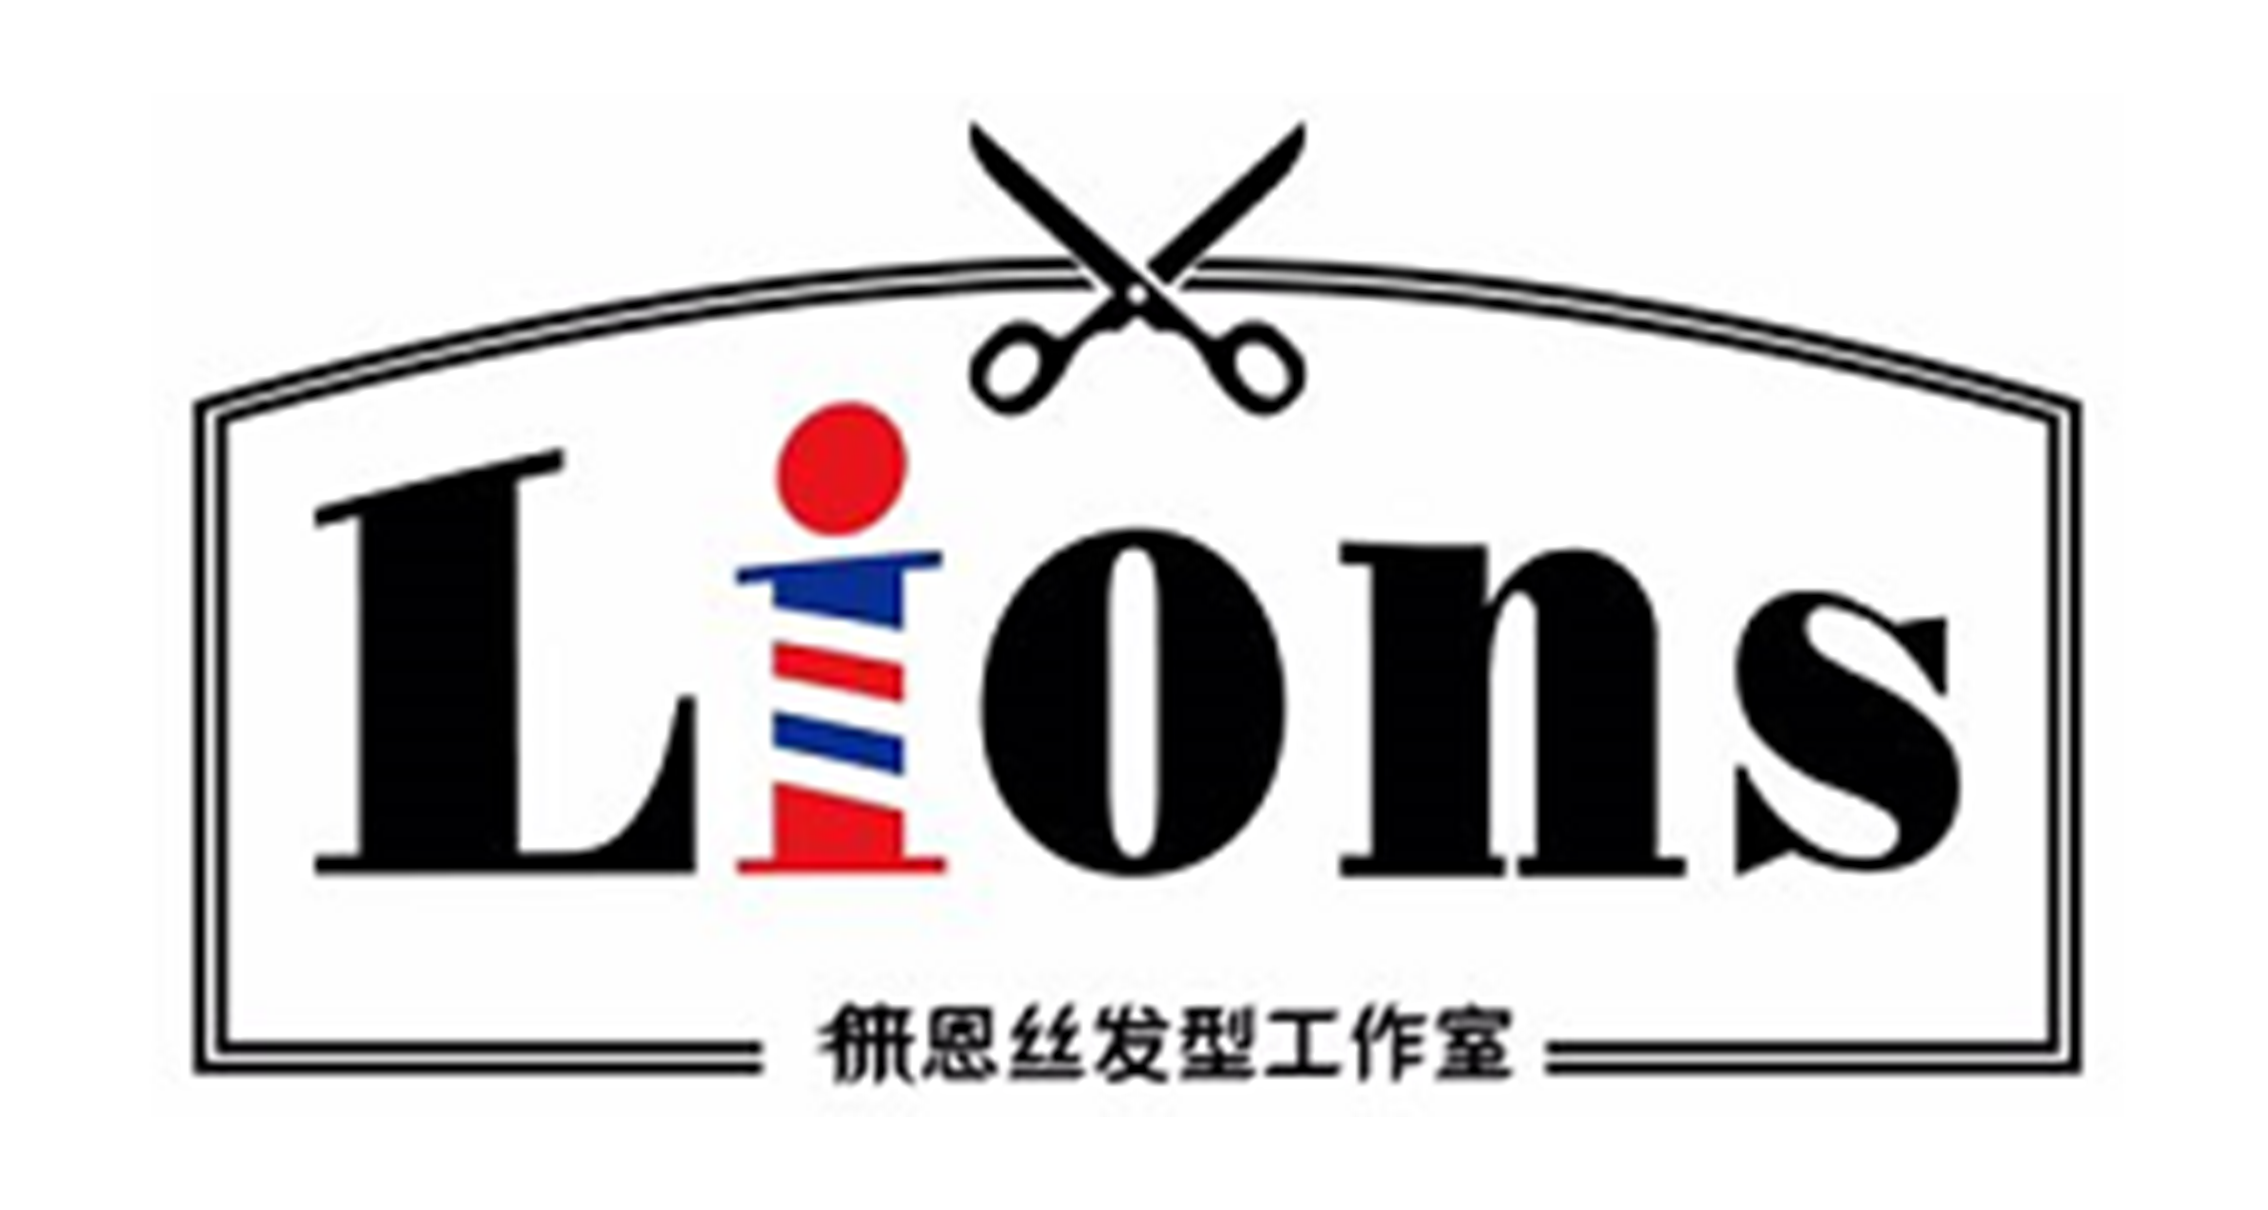 莱恩丝发型工作室 Lions